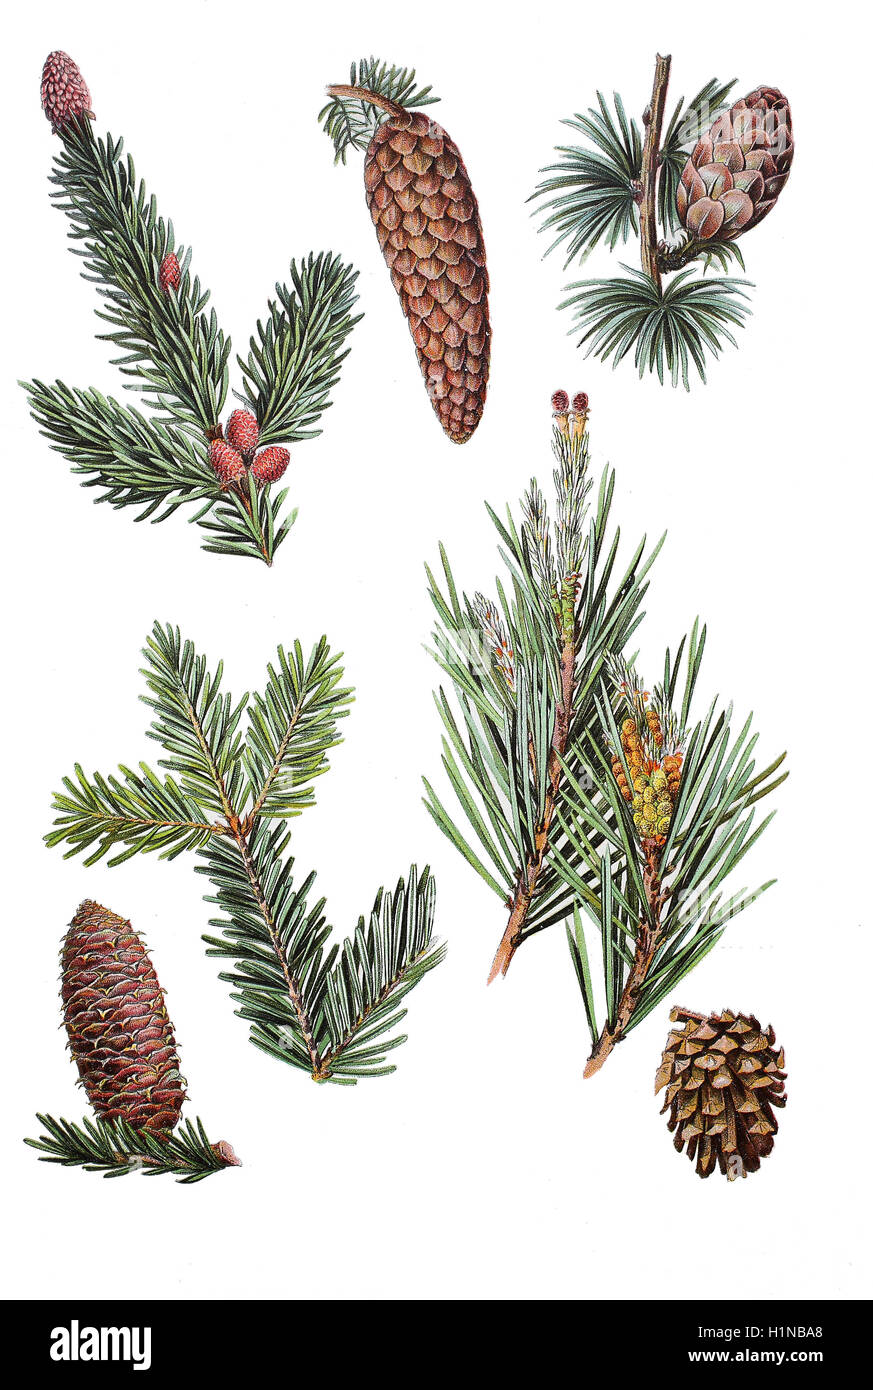 spruce, Picea abies (top left), European larch, Larix decidua (top right), European silver fir, Abies alba (bottem left), pine, Pinus sylvestris (bottem right) Stock Photo